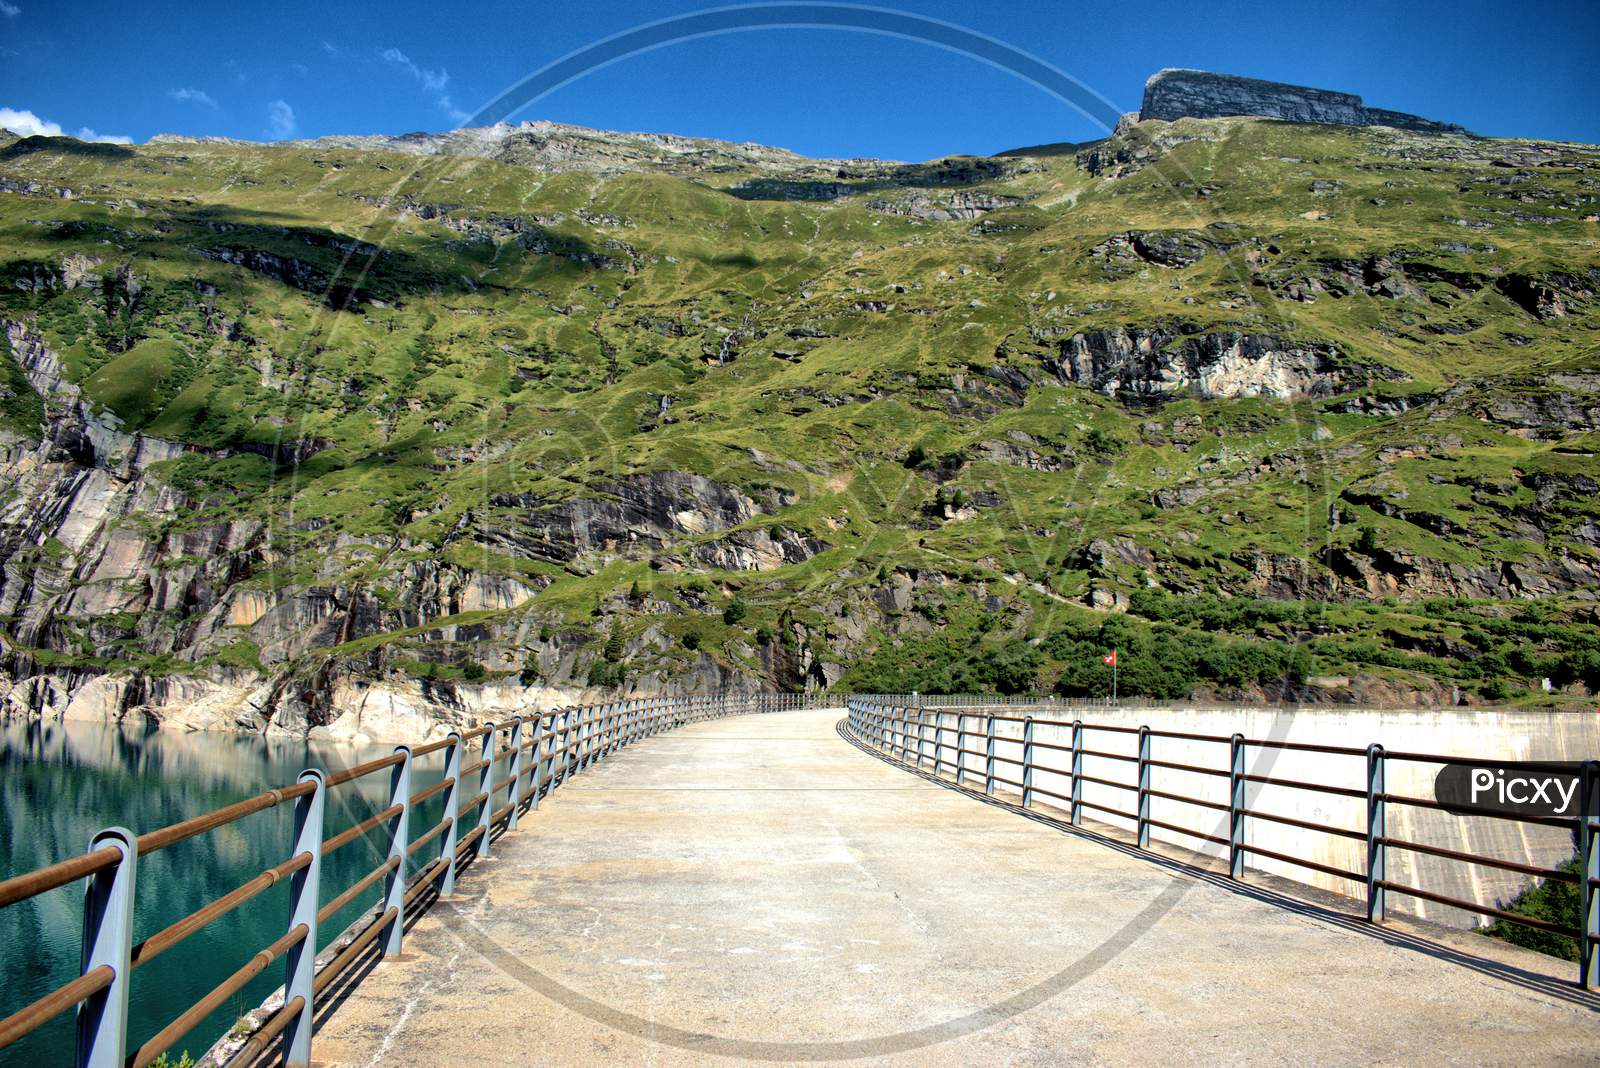 Zervreila dam in Switzerland 31.7.2020